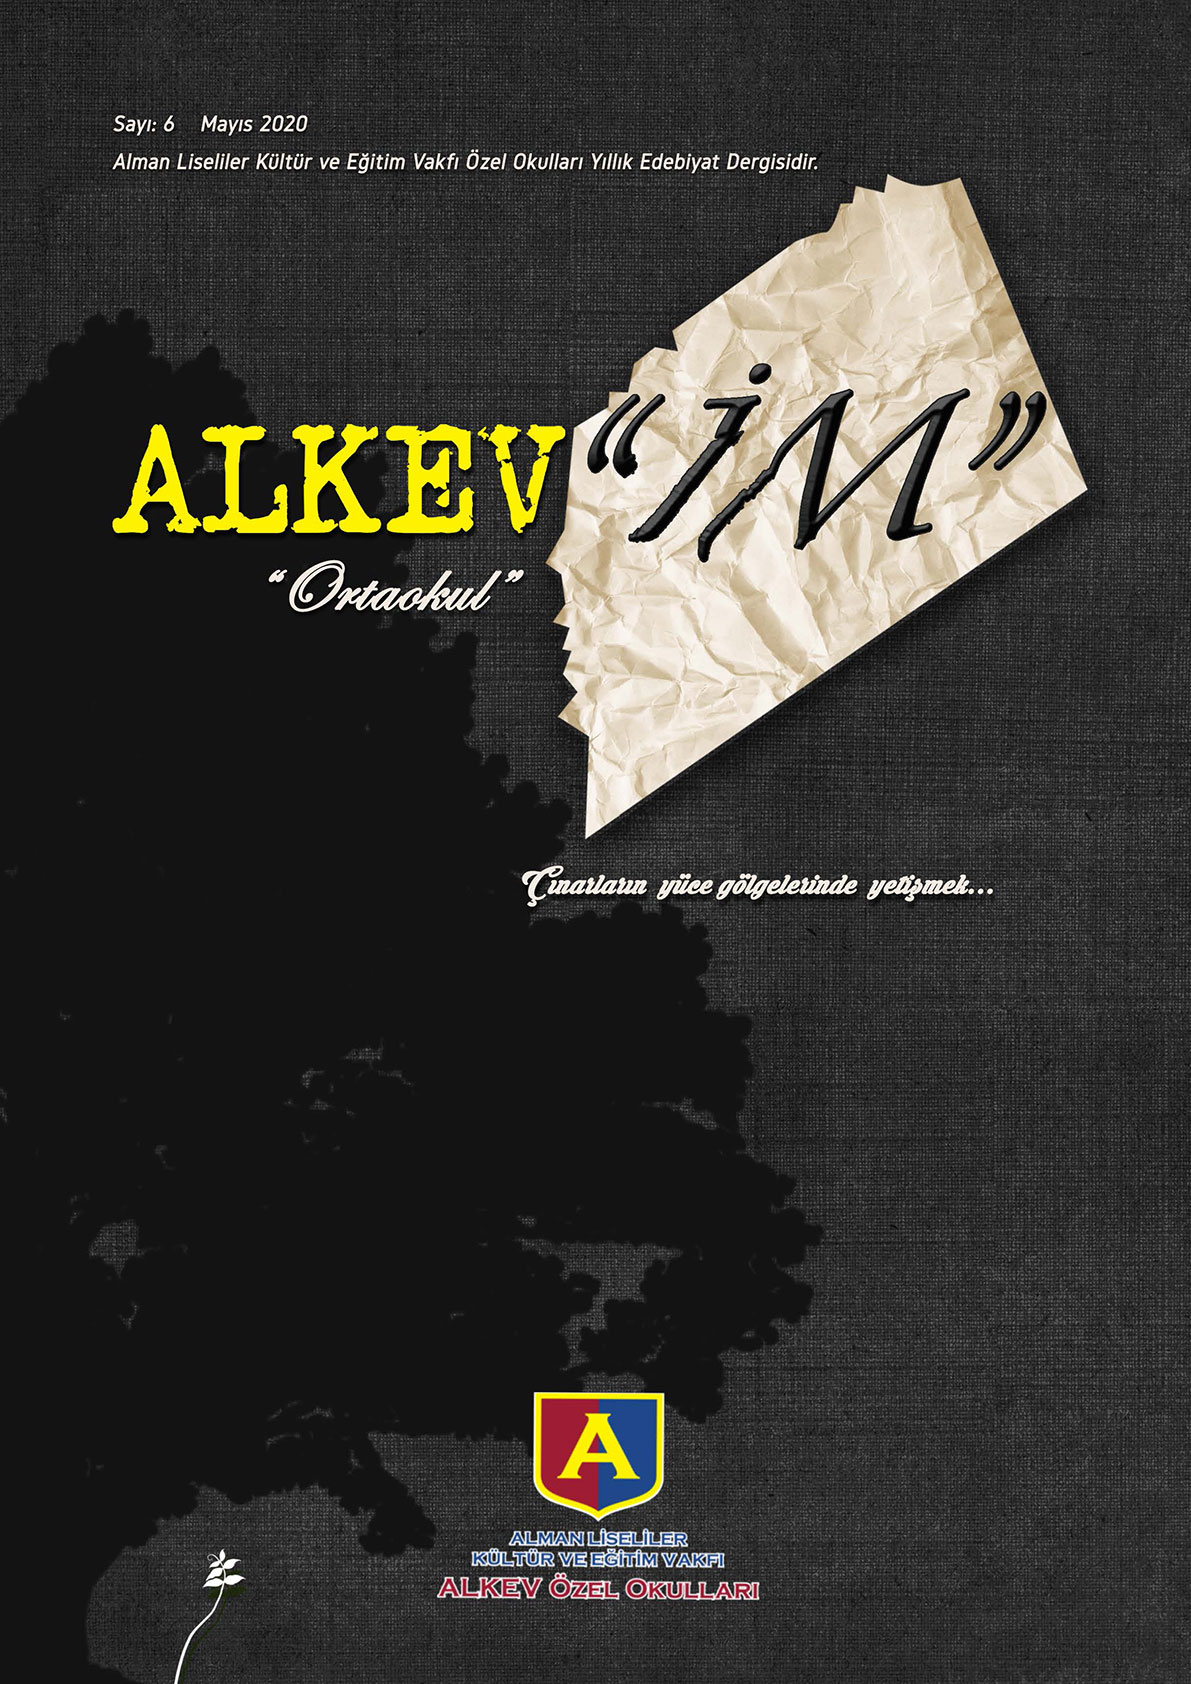 ALKEV'İM' Ortaokul - Sayı: 6 / Mayıs 2020